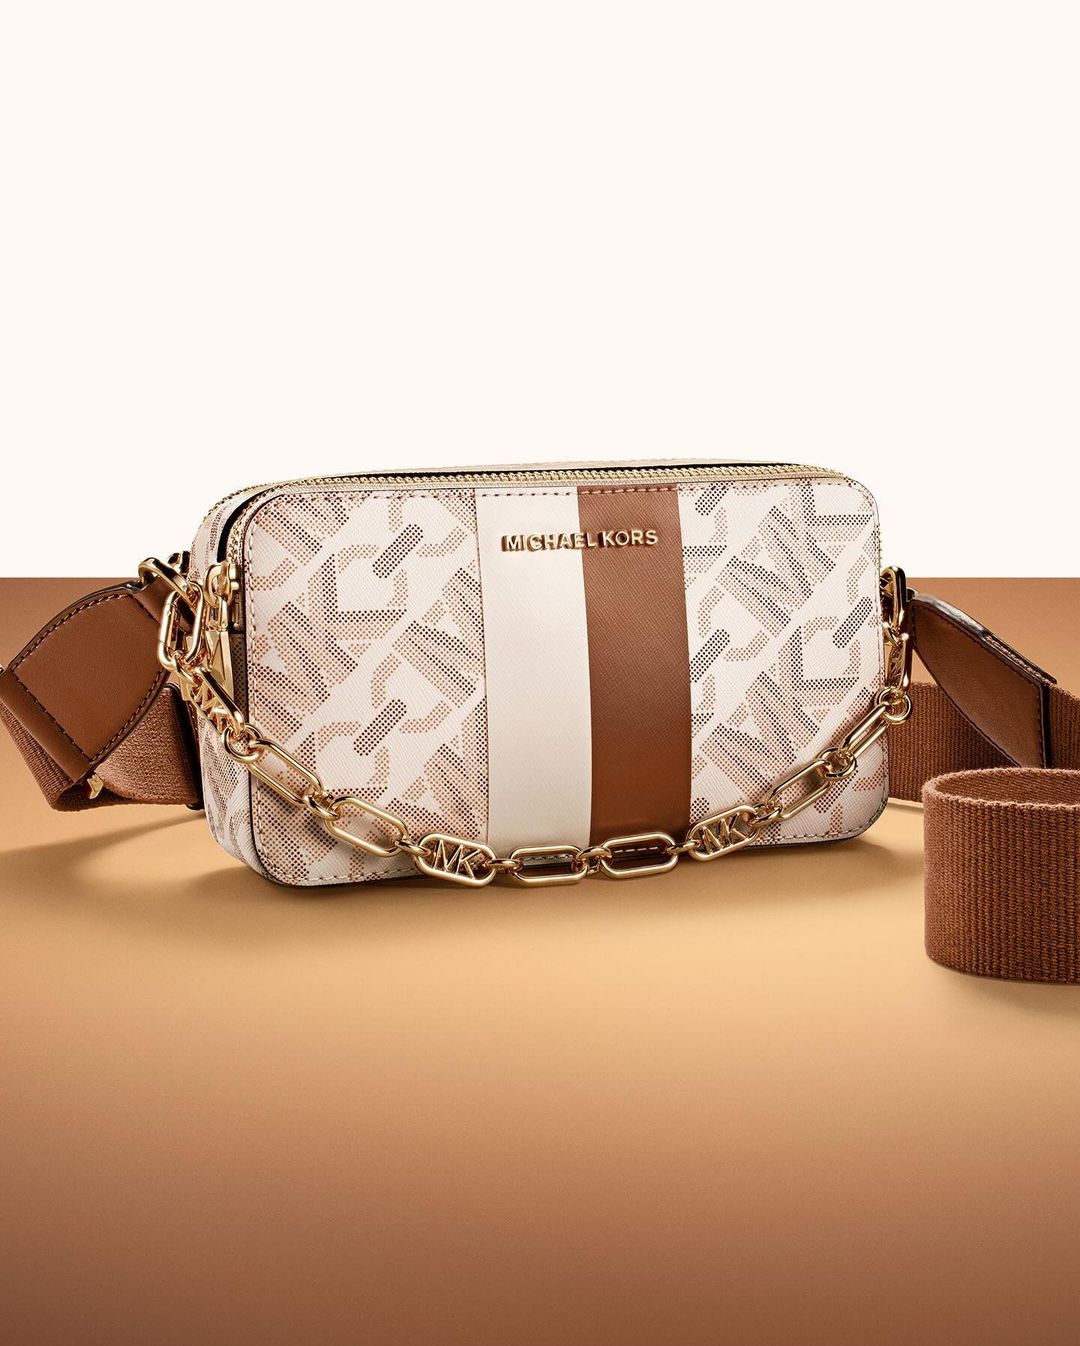 Brown and cream coloured crossbody purse.